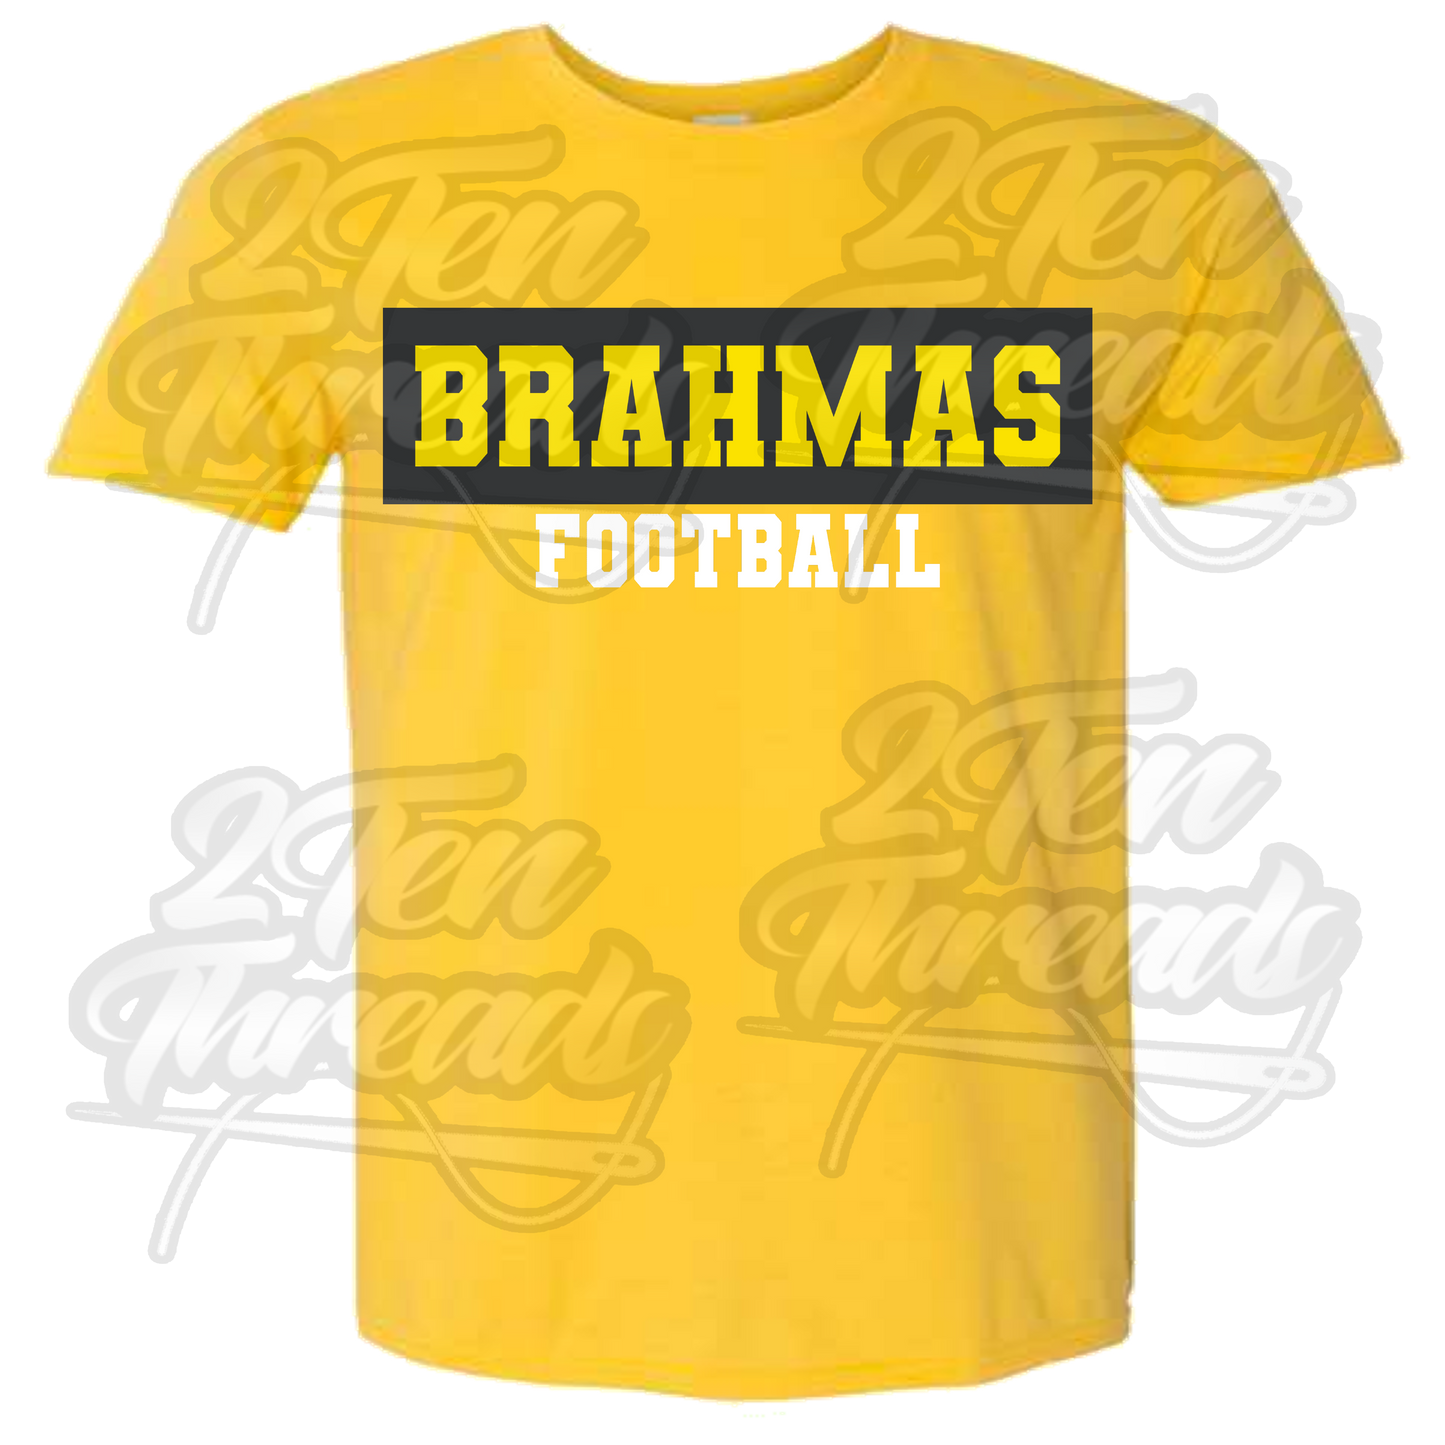 Brahmas Name Plate Shirt